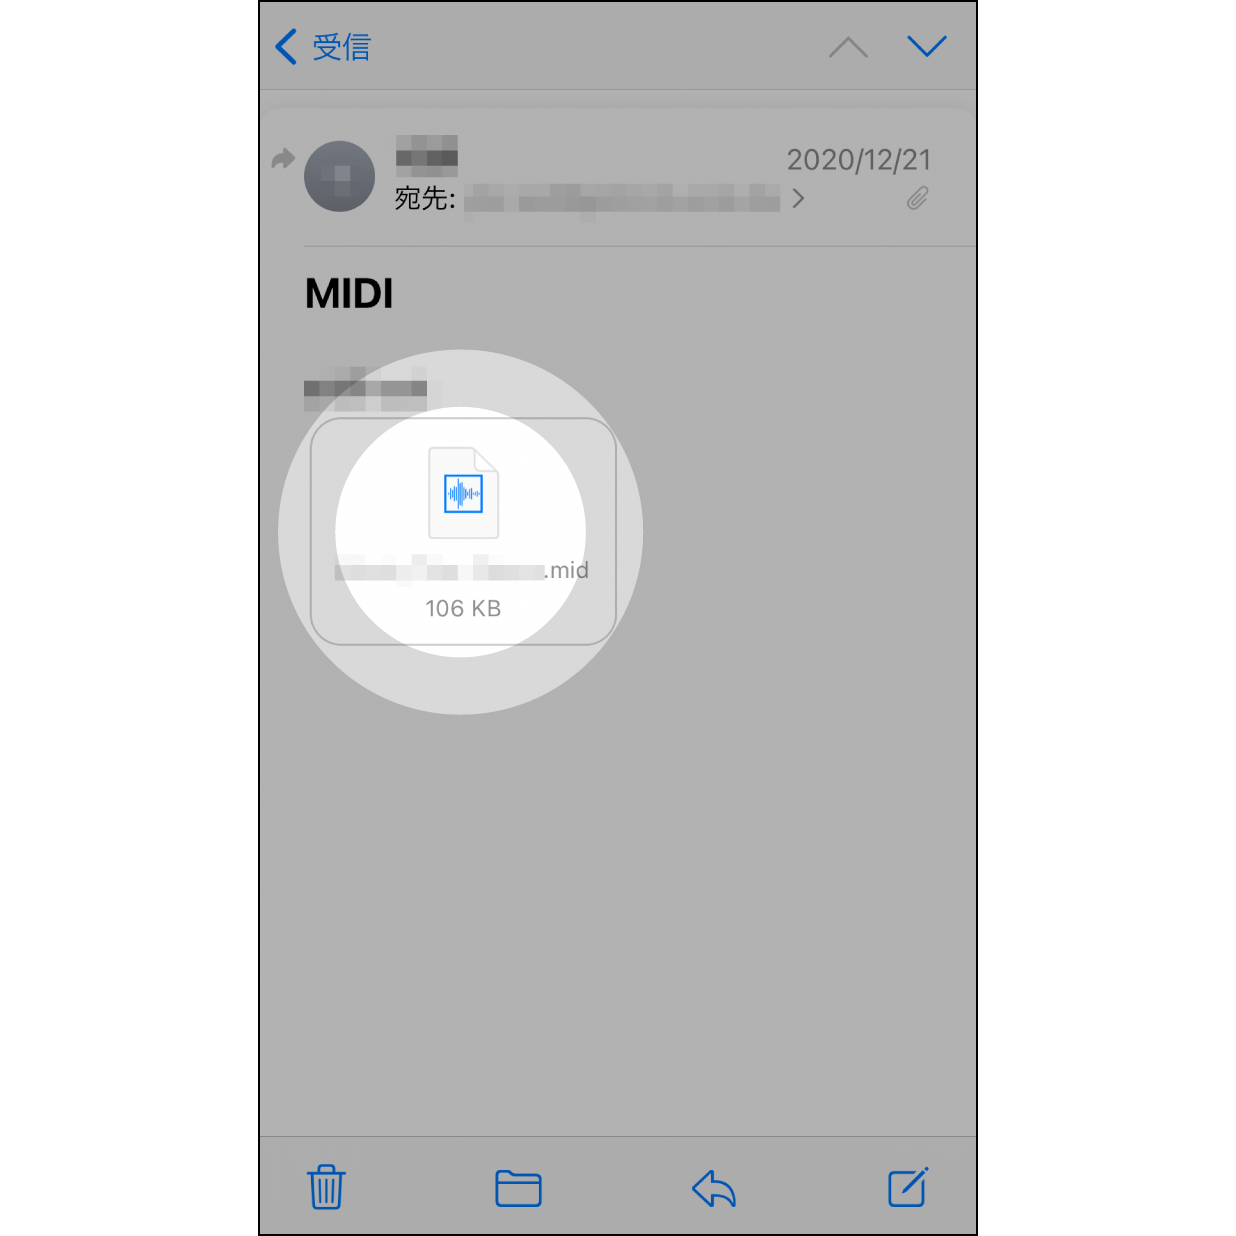 1. MIDIファイルが添付されたメールを開くメール受信箱から、MIDIファイルが添付されたメールを開きます。